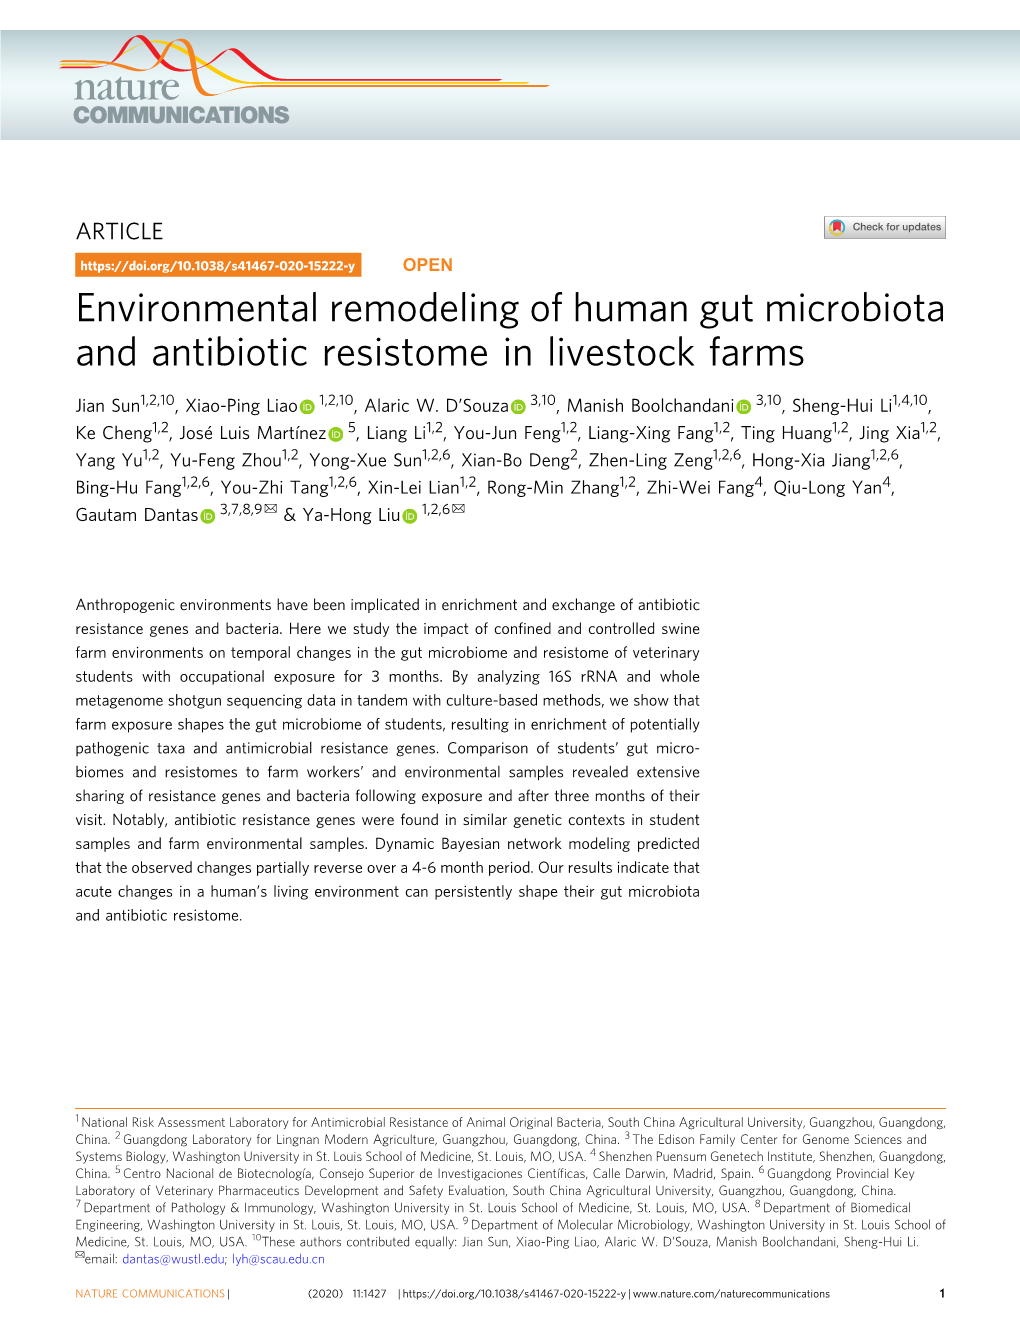 Environmental Remodeling of Human Gut Microbiota and Antibiotic Resistome in Livestock Farms